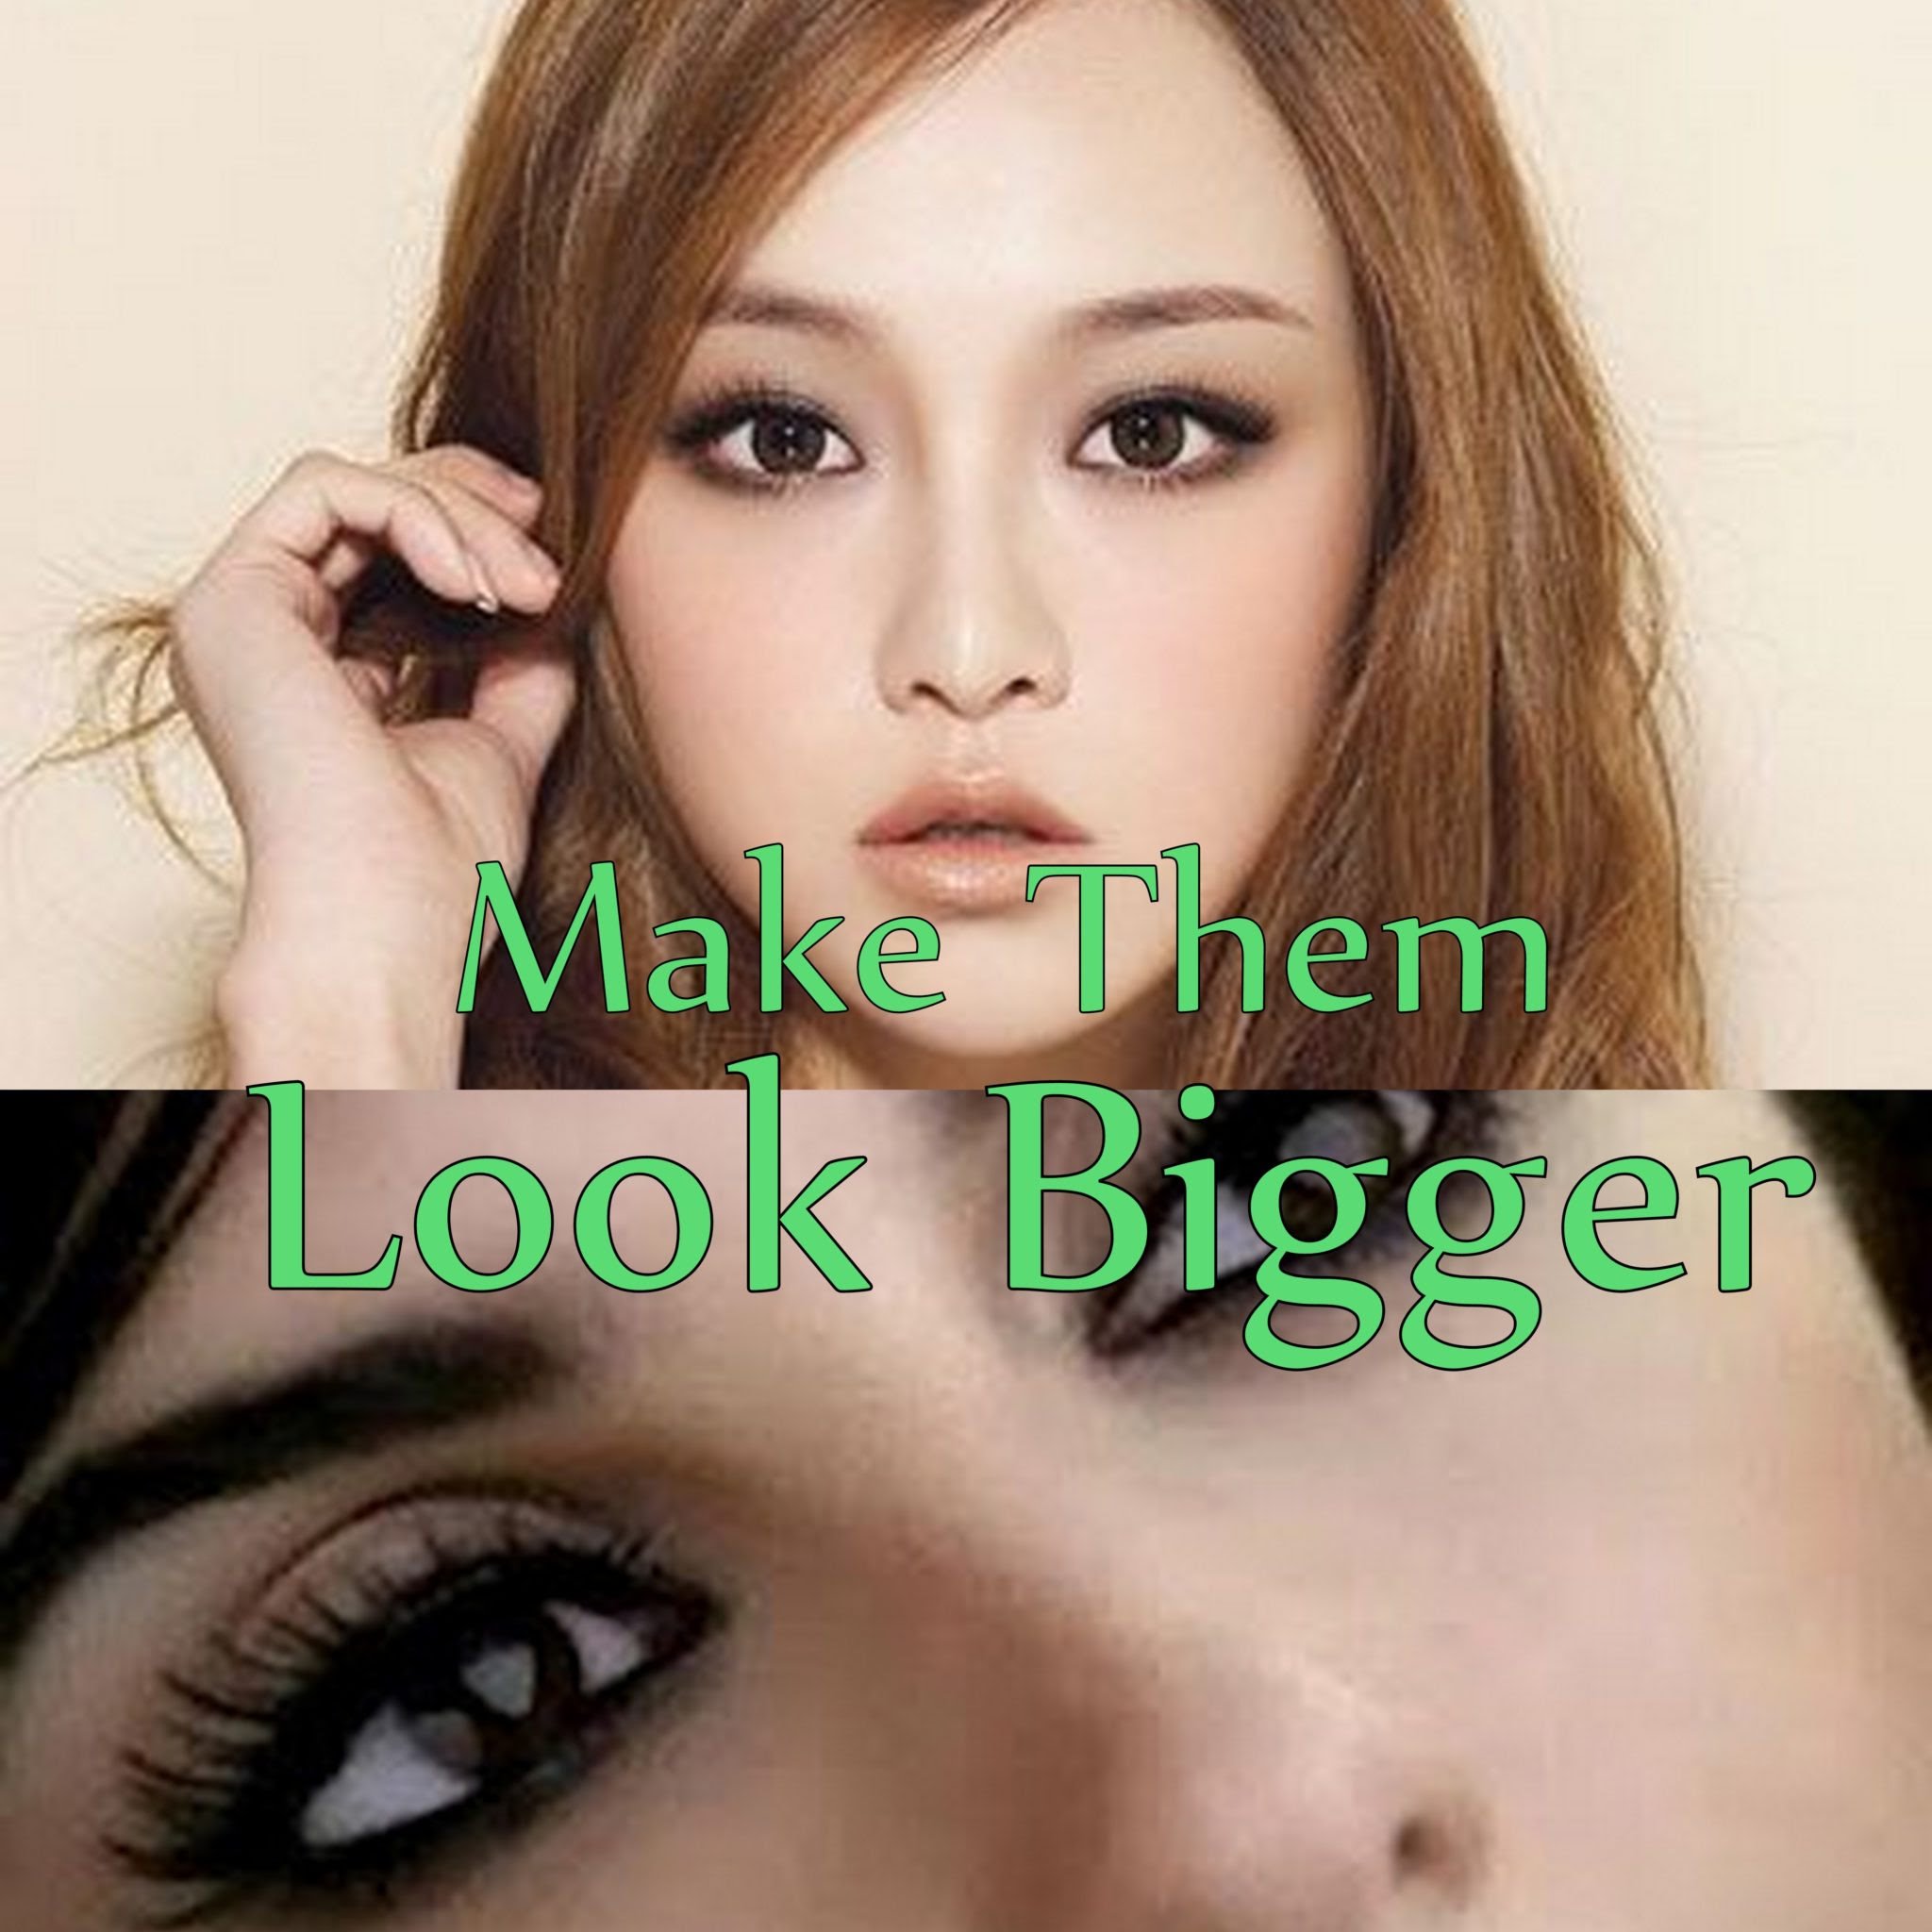 Makeup tricks to make eyes look bigger pictures